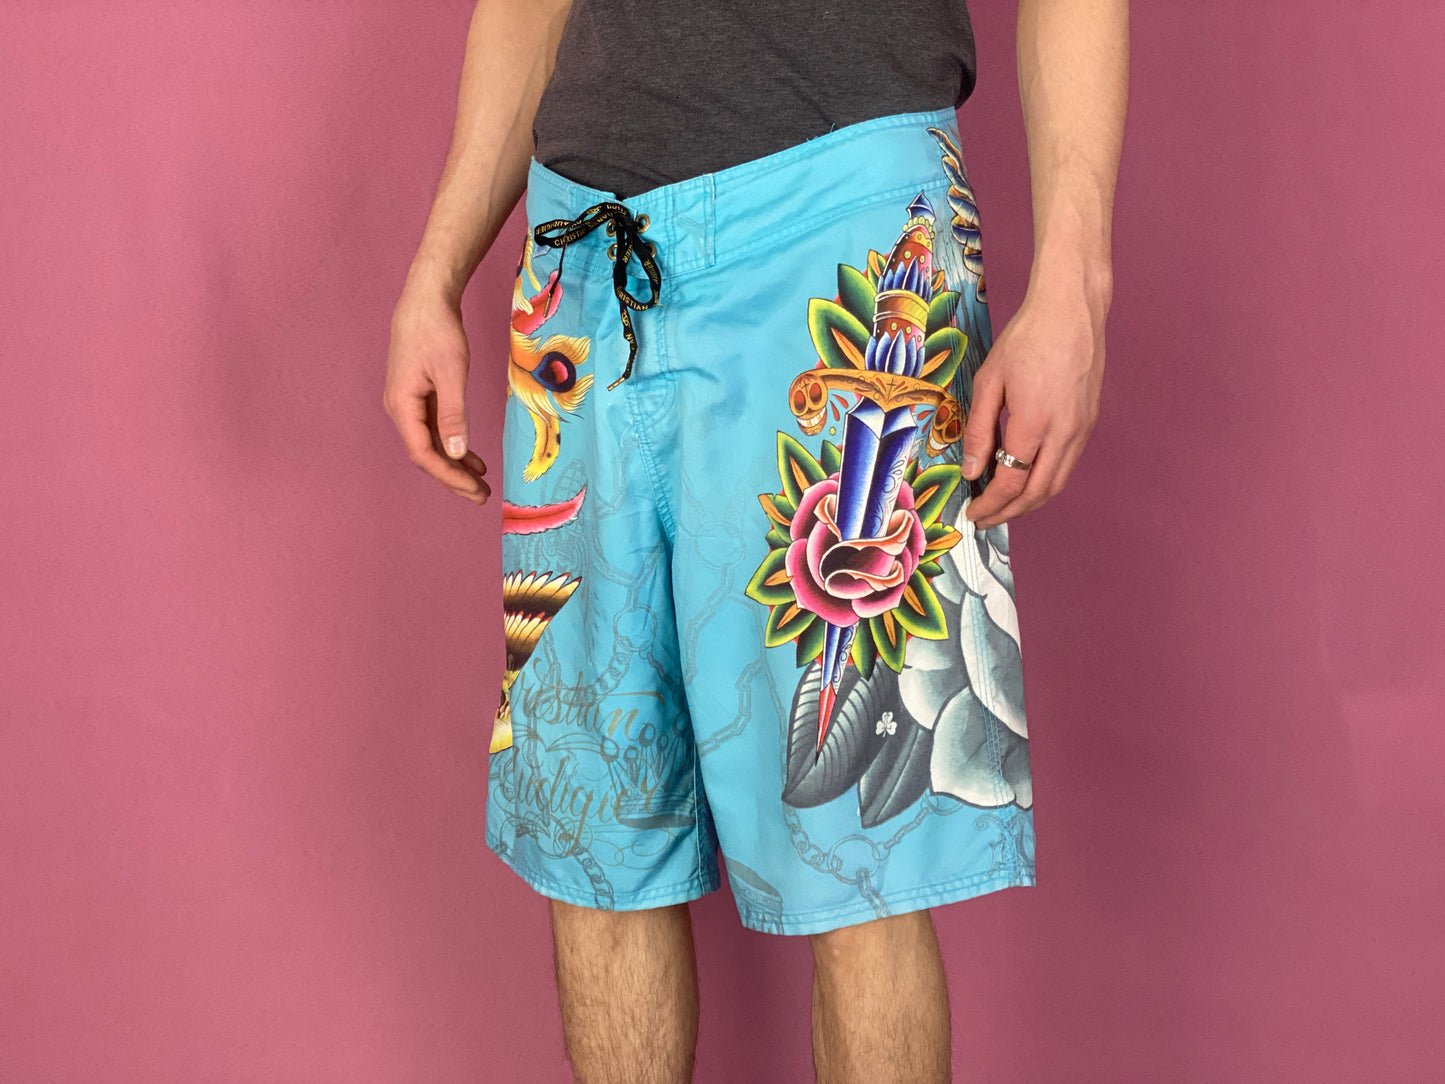 Christian Audiger Vintage Men's Boardshorts Shorts - Medium Blue Polyester